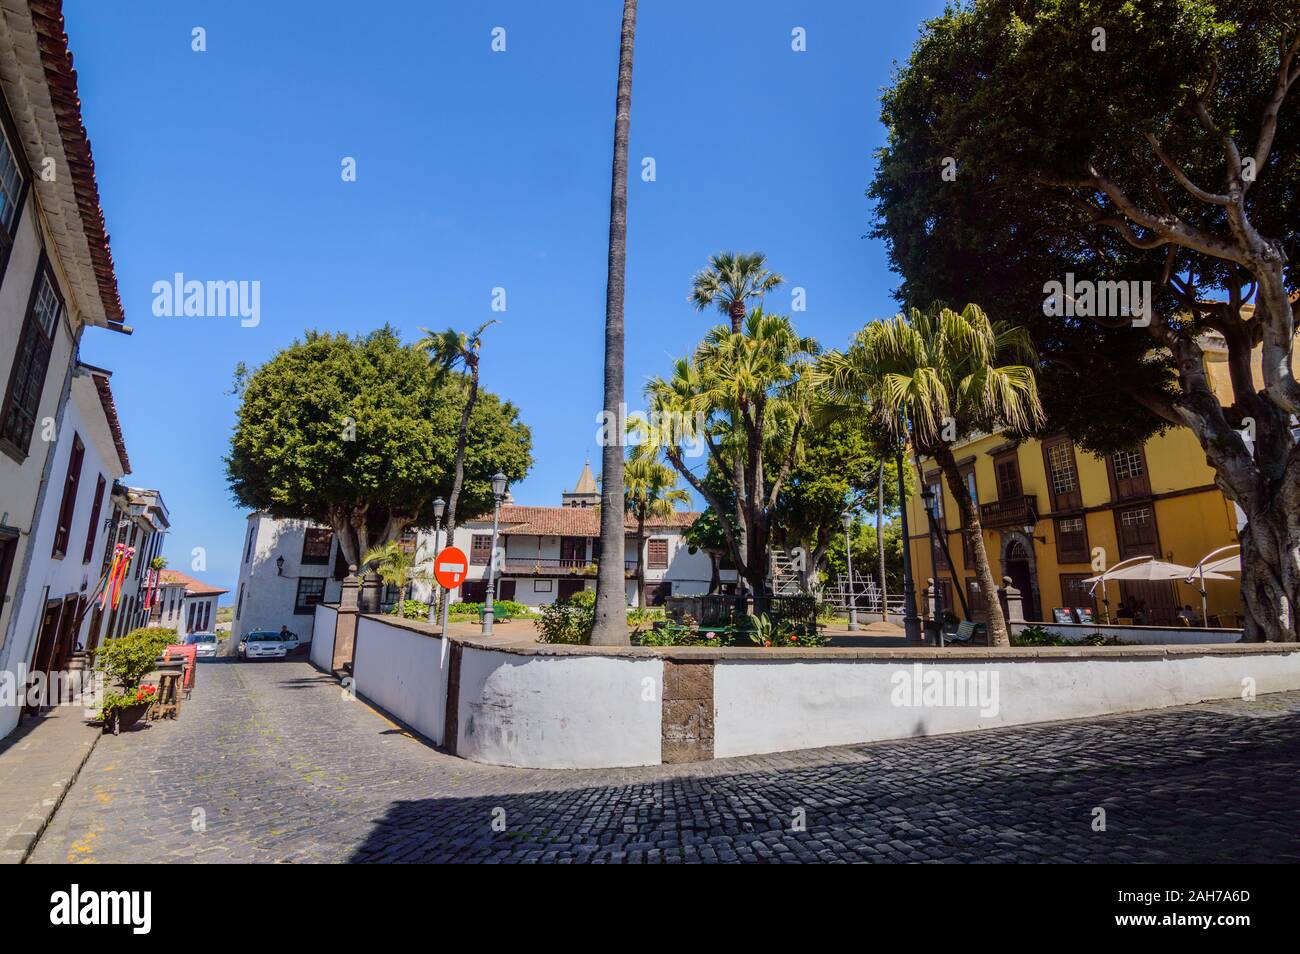 Picturesque Square In The Center Of The Villagr Of Icod De Los Vinos. April 14, 2019. Icod De Los Vinos, Santa Cruz De Tenerife Spain Africa. Travel T Stock Photo